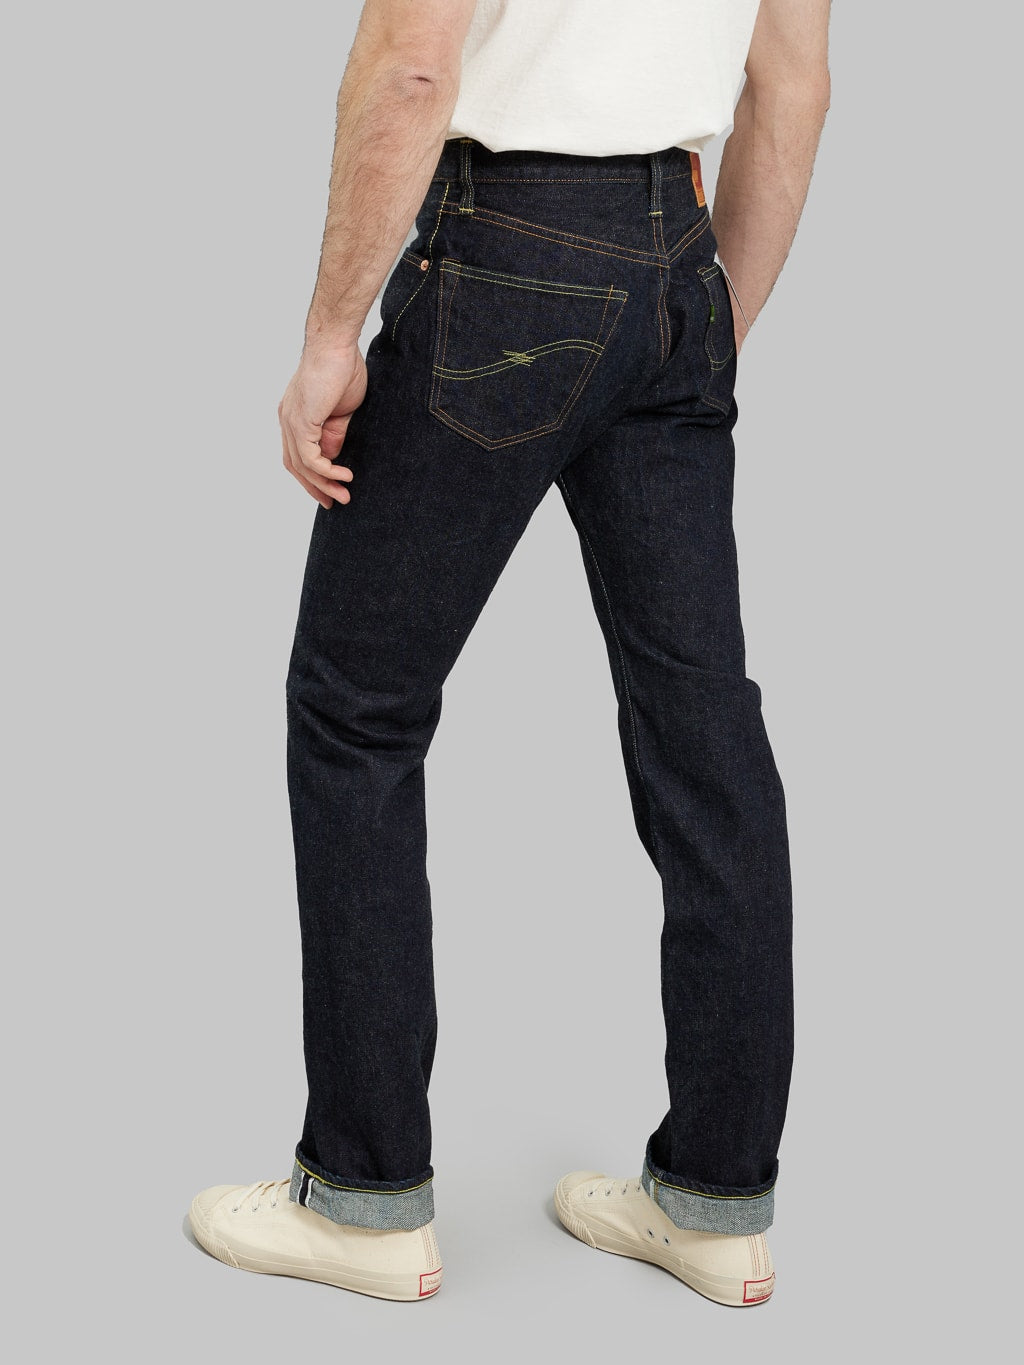 Fob factory slim straight denim jeans back fit